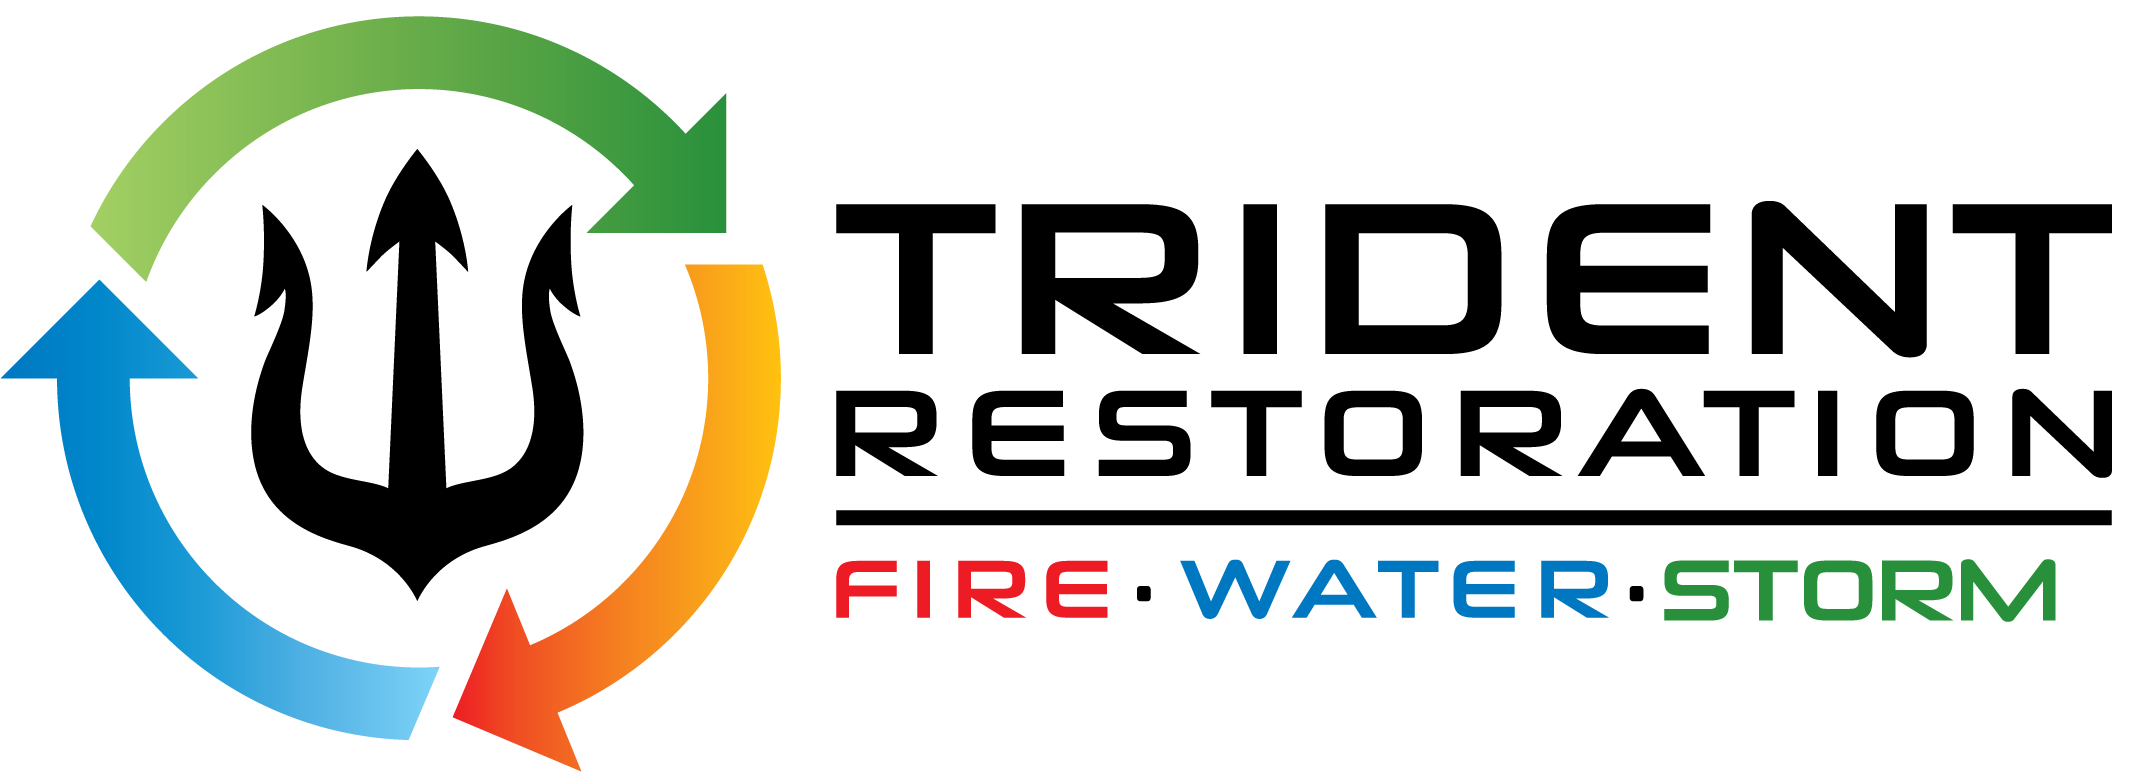 Trident Restoration Fire Water Mold Storm Damage